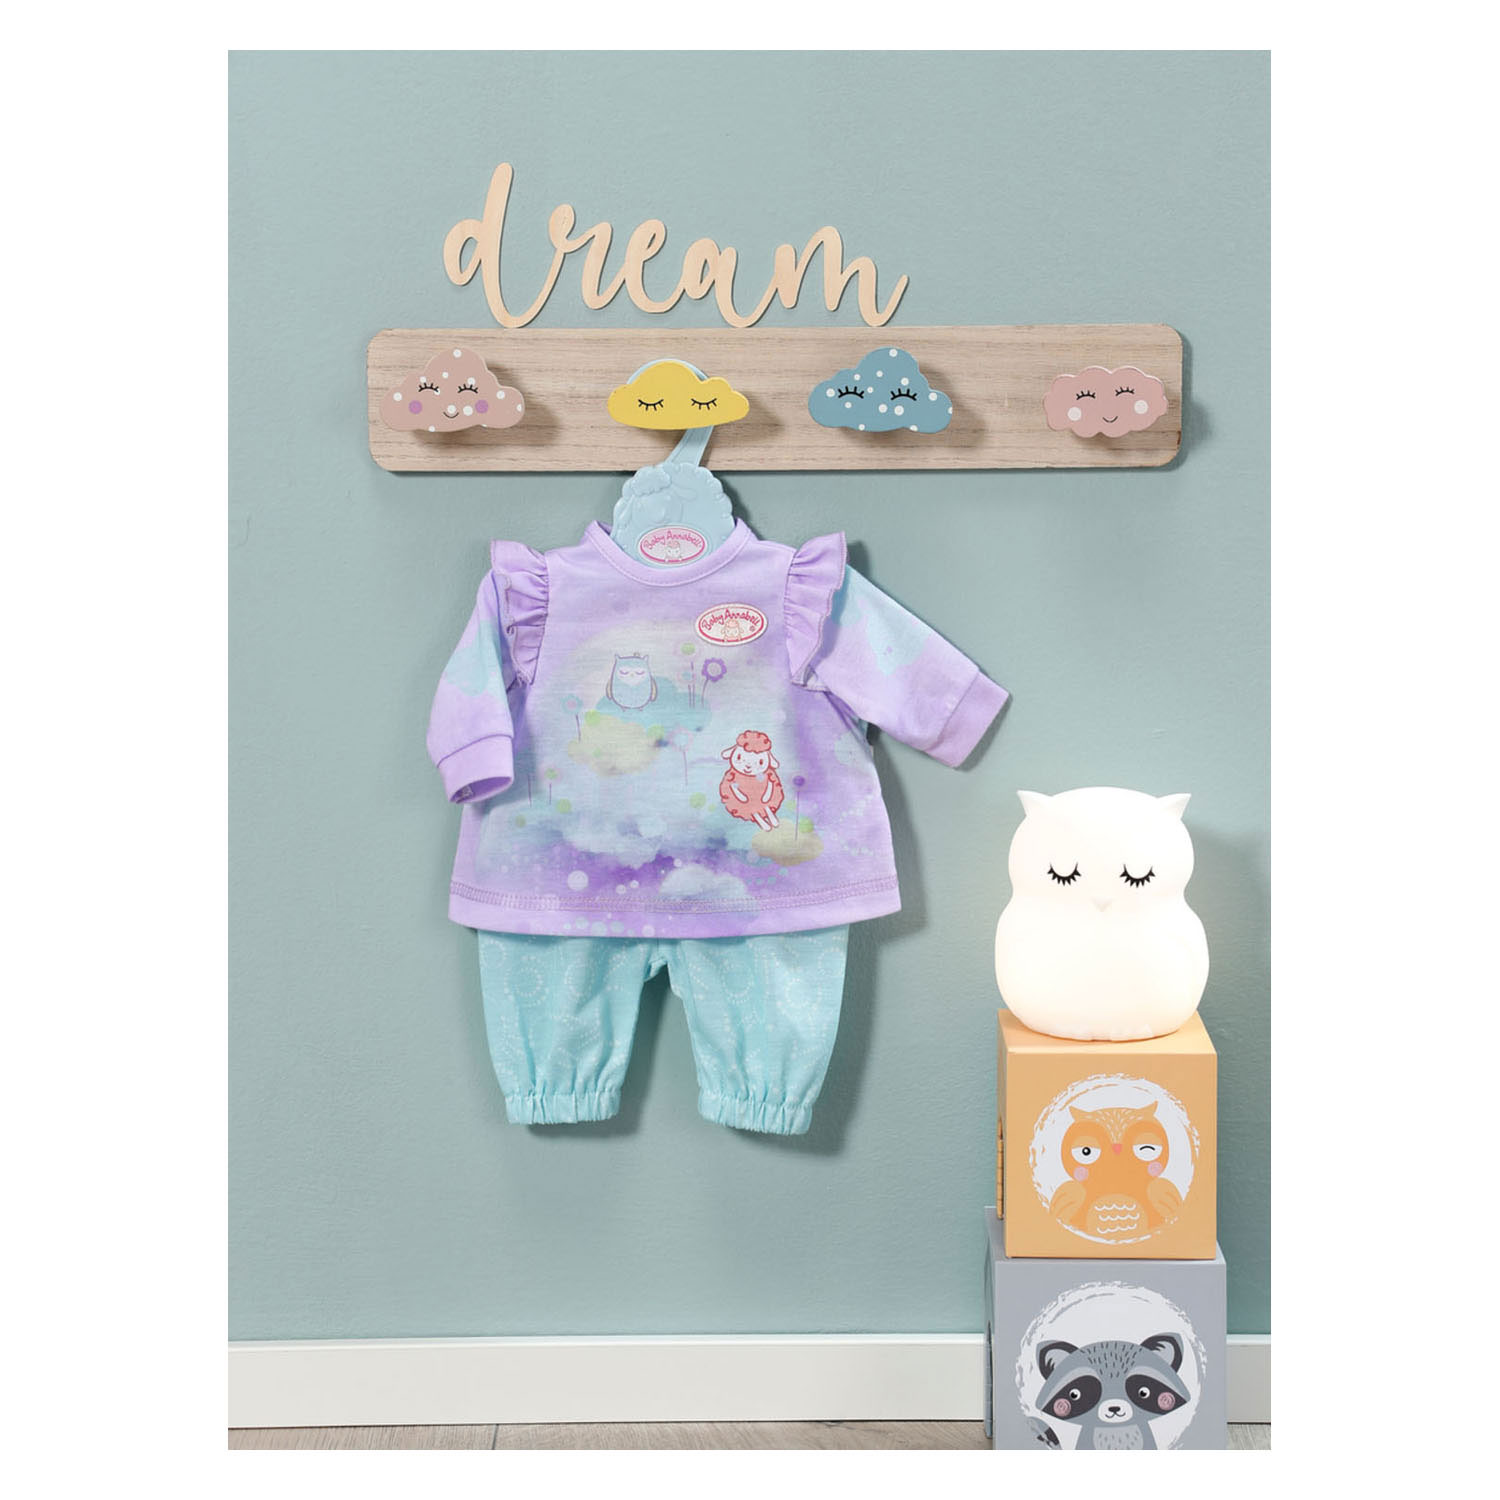 Baby Annabell Sweet Dream Nachtwäsche Puppen-Outfit, 43cm